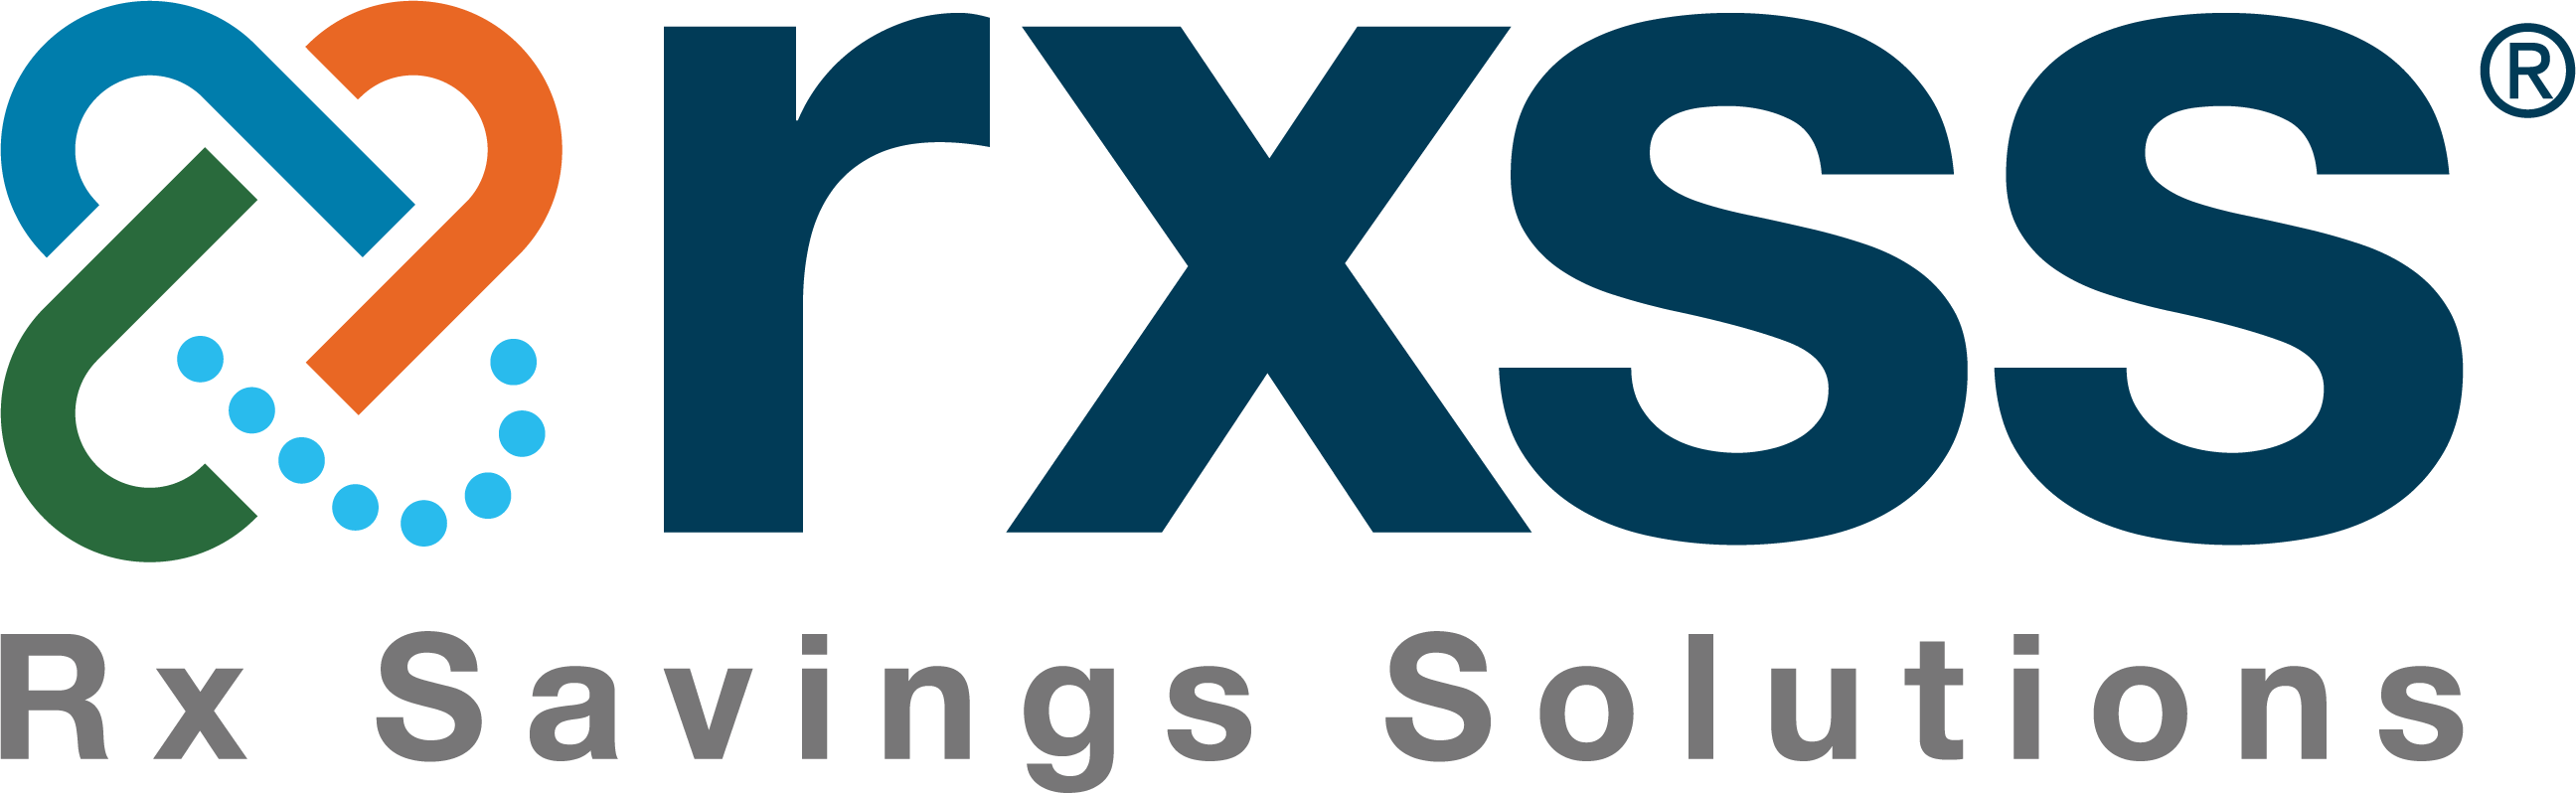 RXSS Rx Savings Solutions